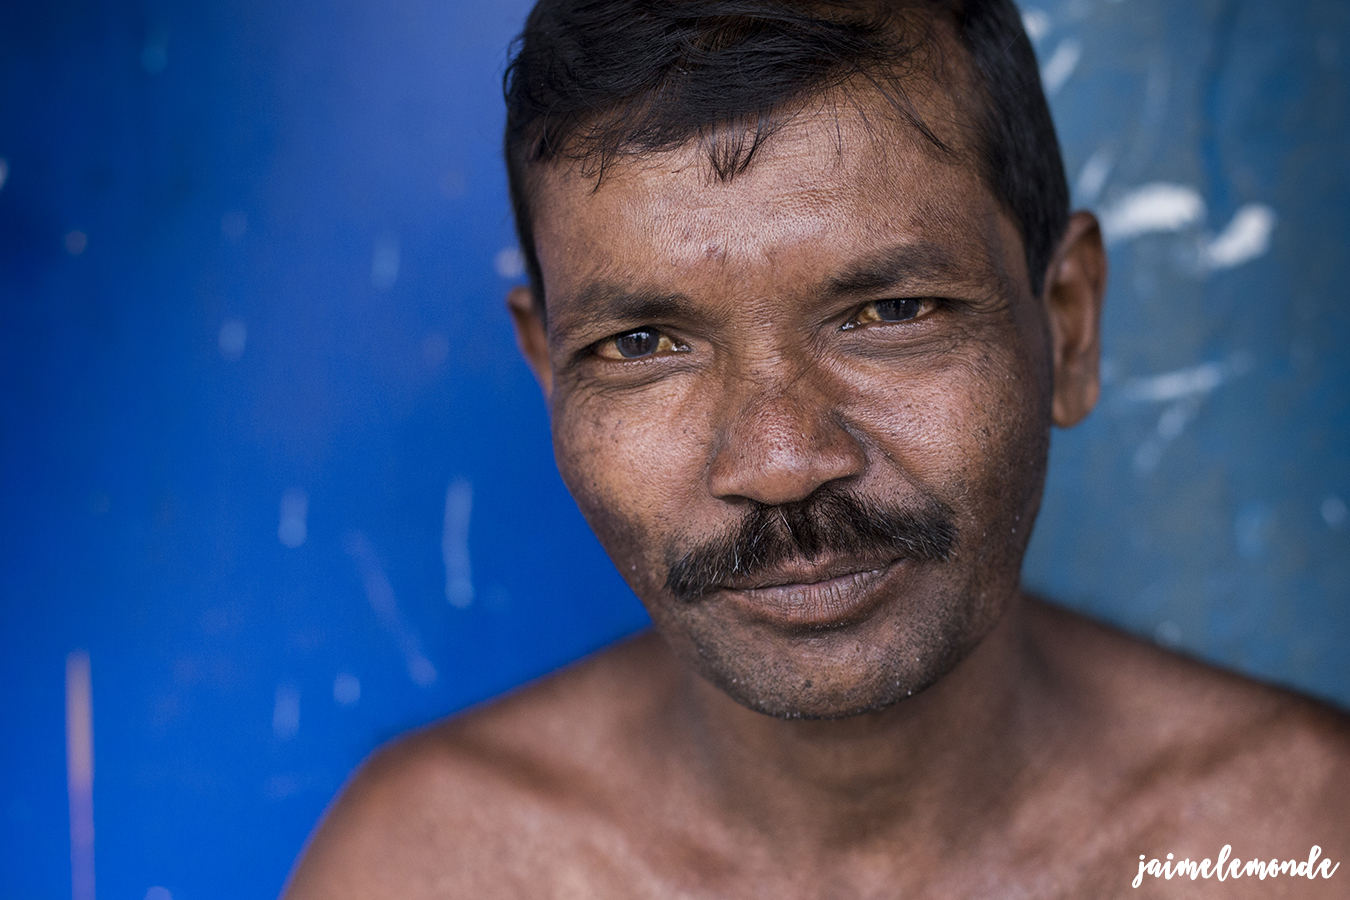 Portraits de voyage au Sri Lanka ©jaimelemonde (11)